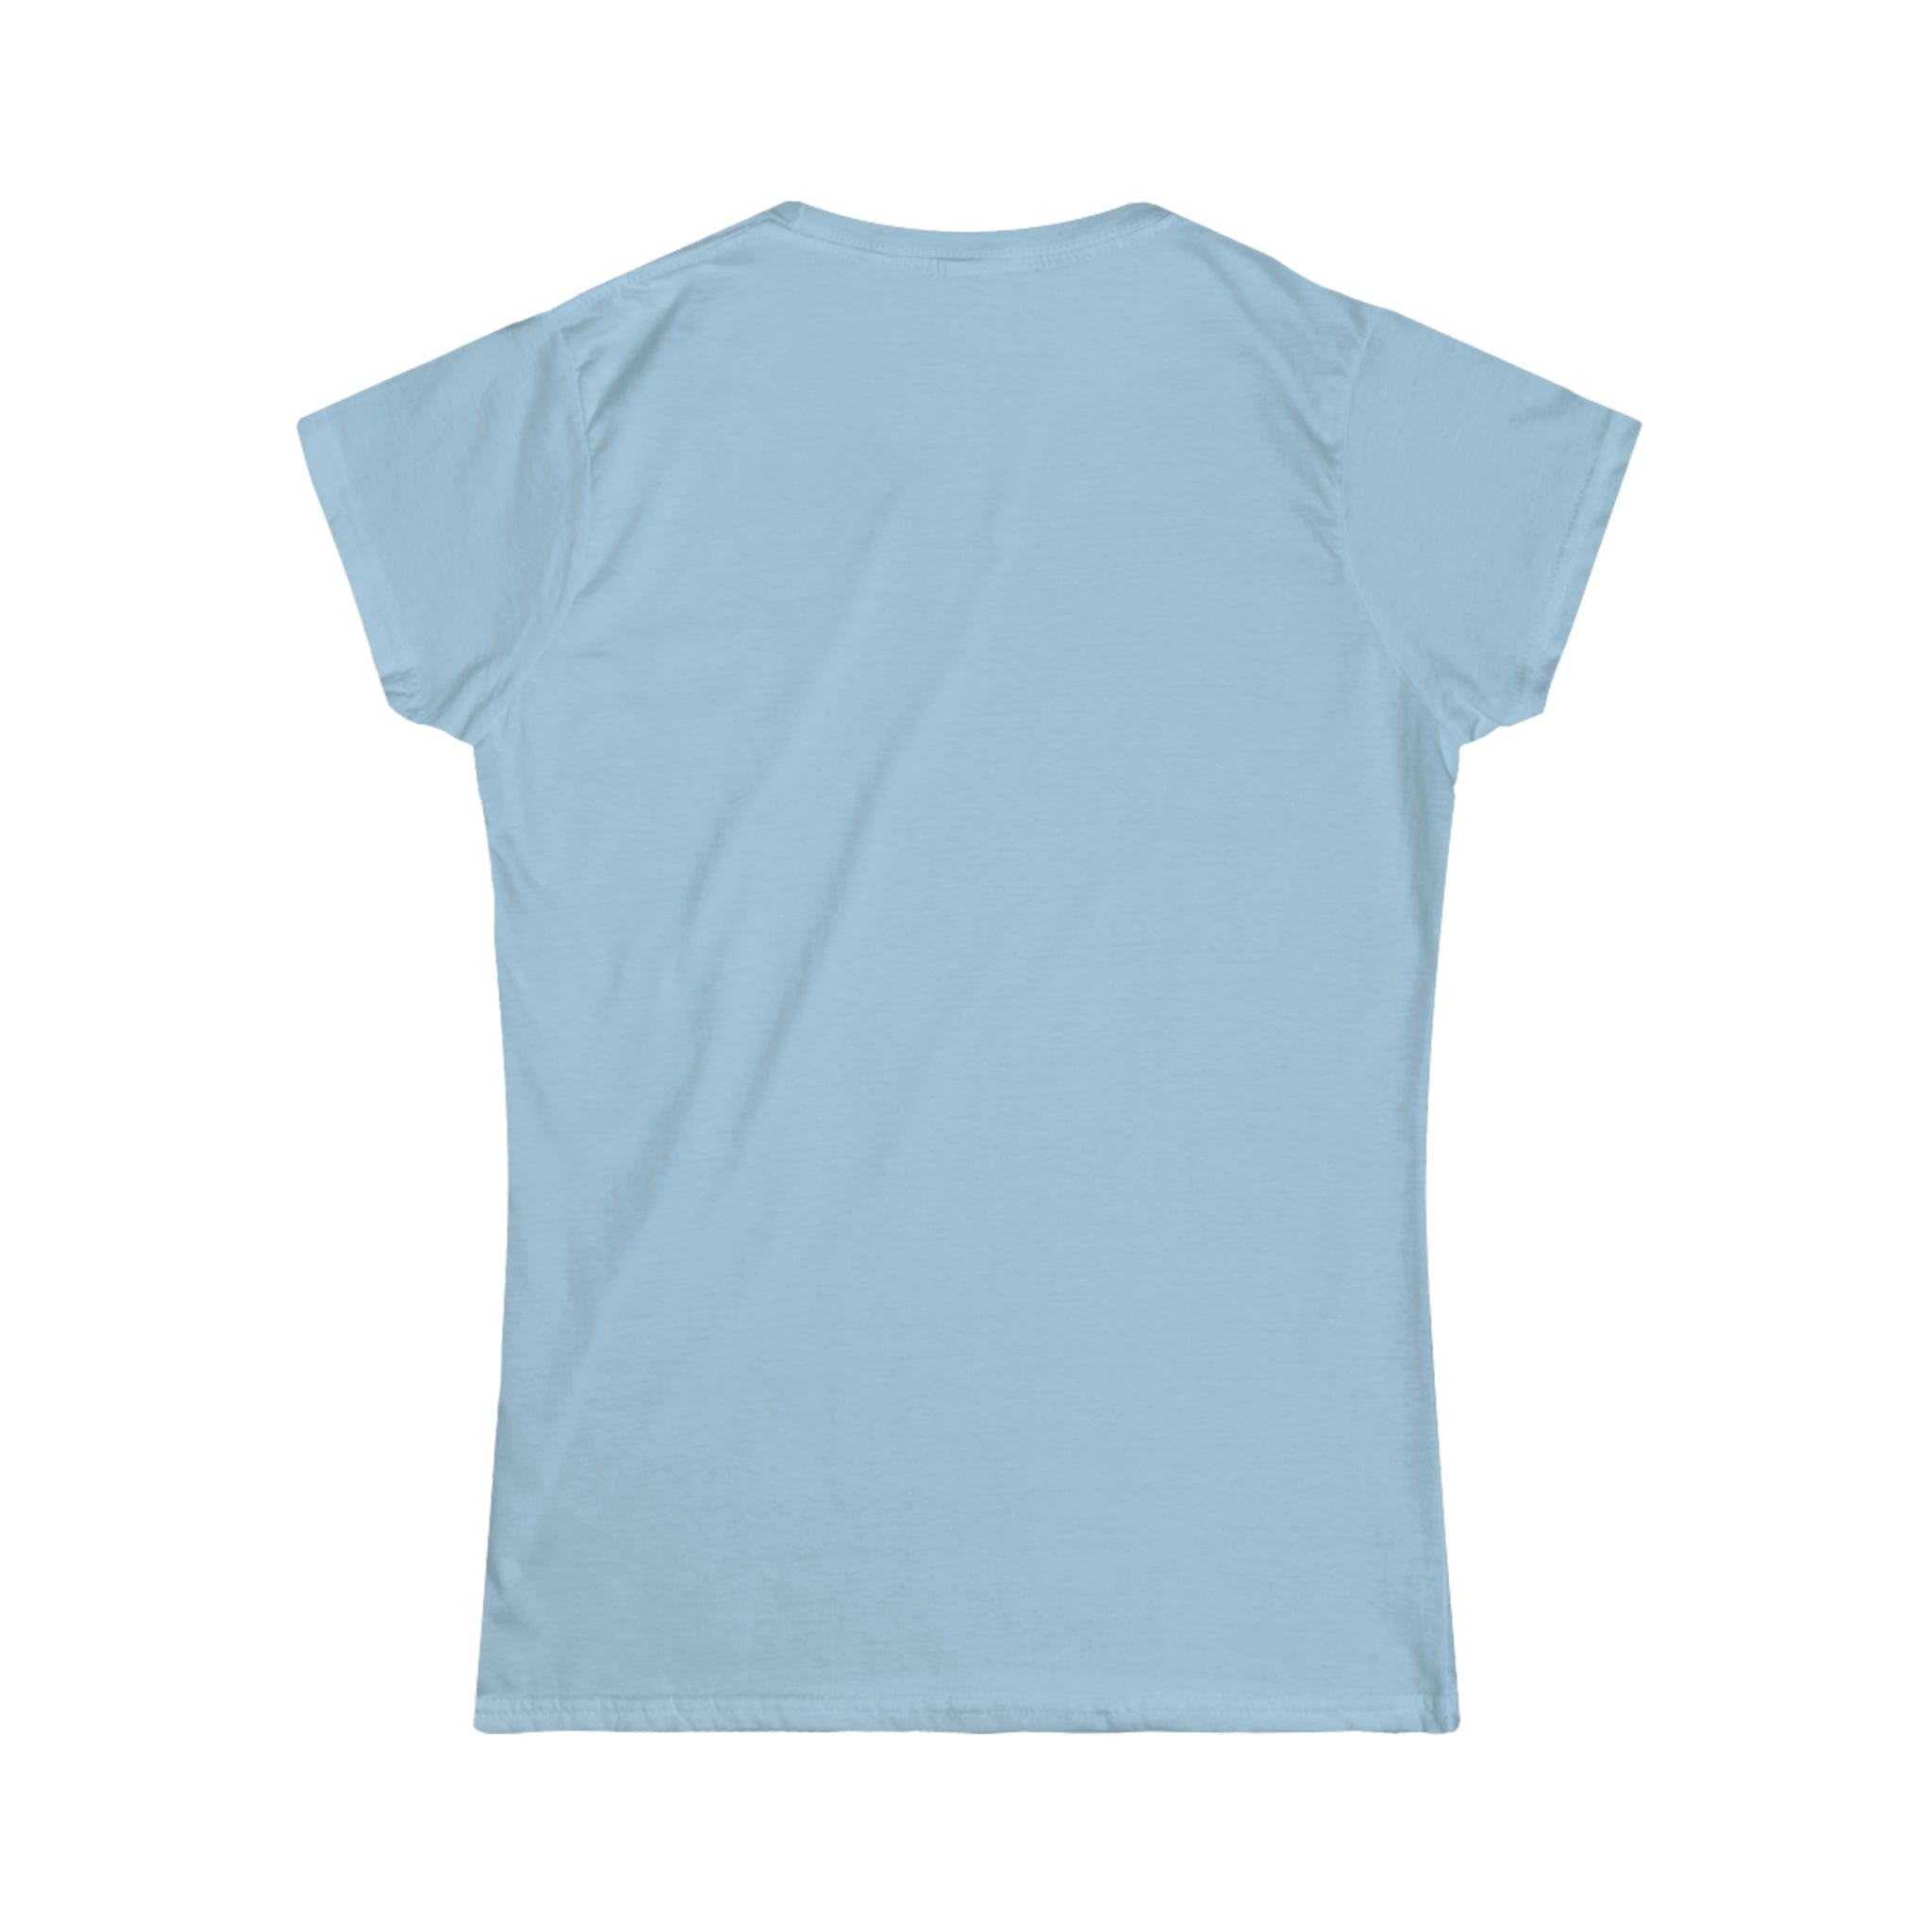 Printify T-Shirt Believe in Magic Women's Softstyle Tee - S-2XL